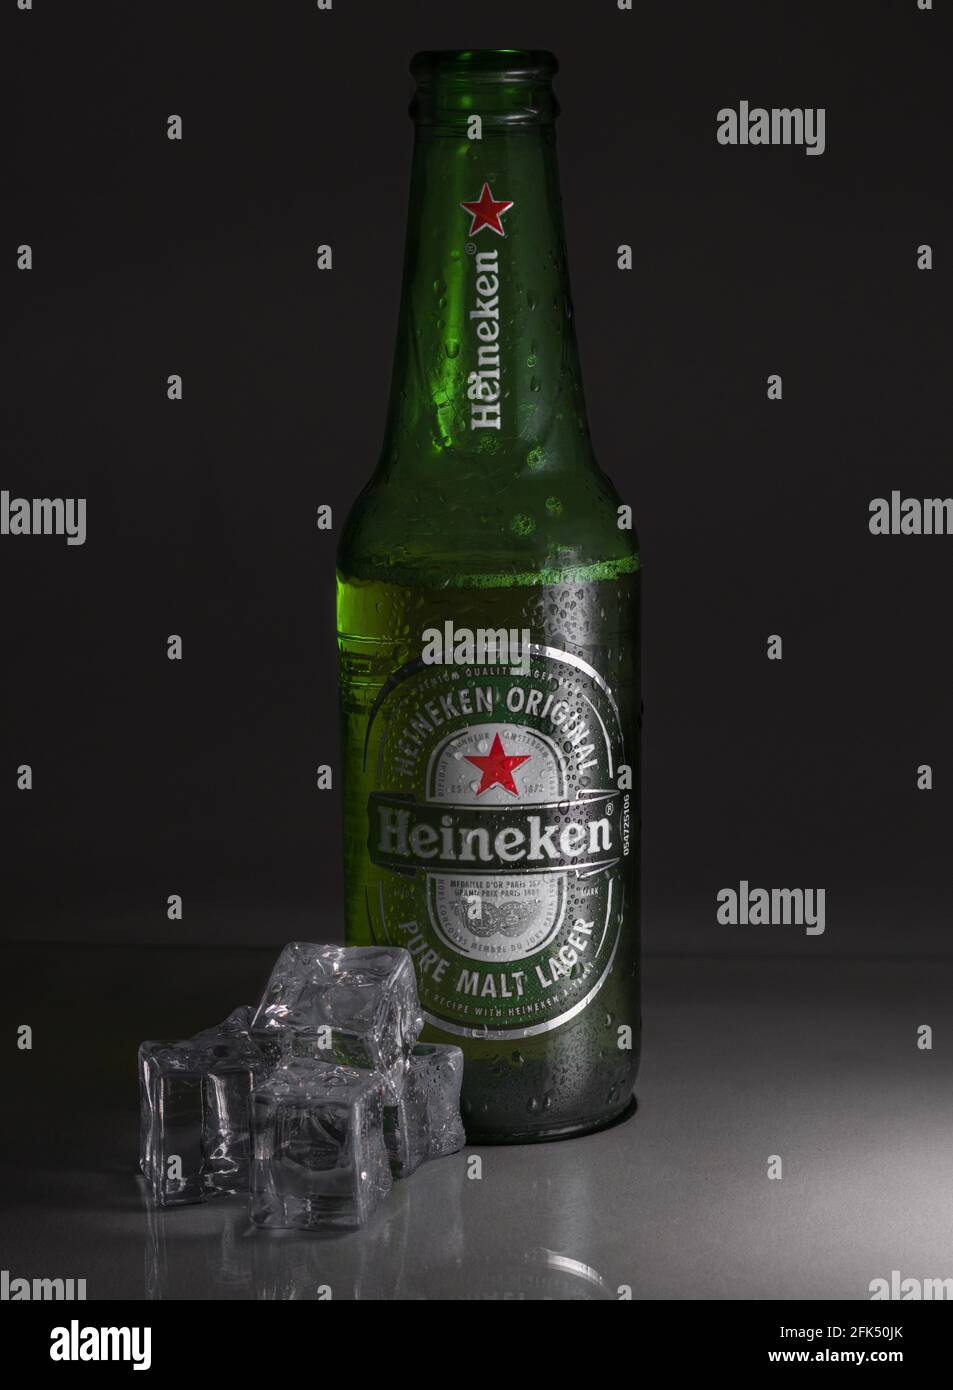 CORNELLA DE LLOBREGAT, SPAIN - Apr 21, 2021: bottle of heineken lager beer with ice with a dark background. Stock Photo